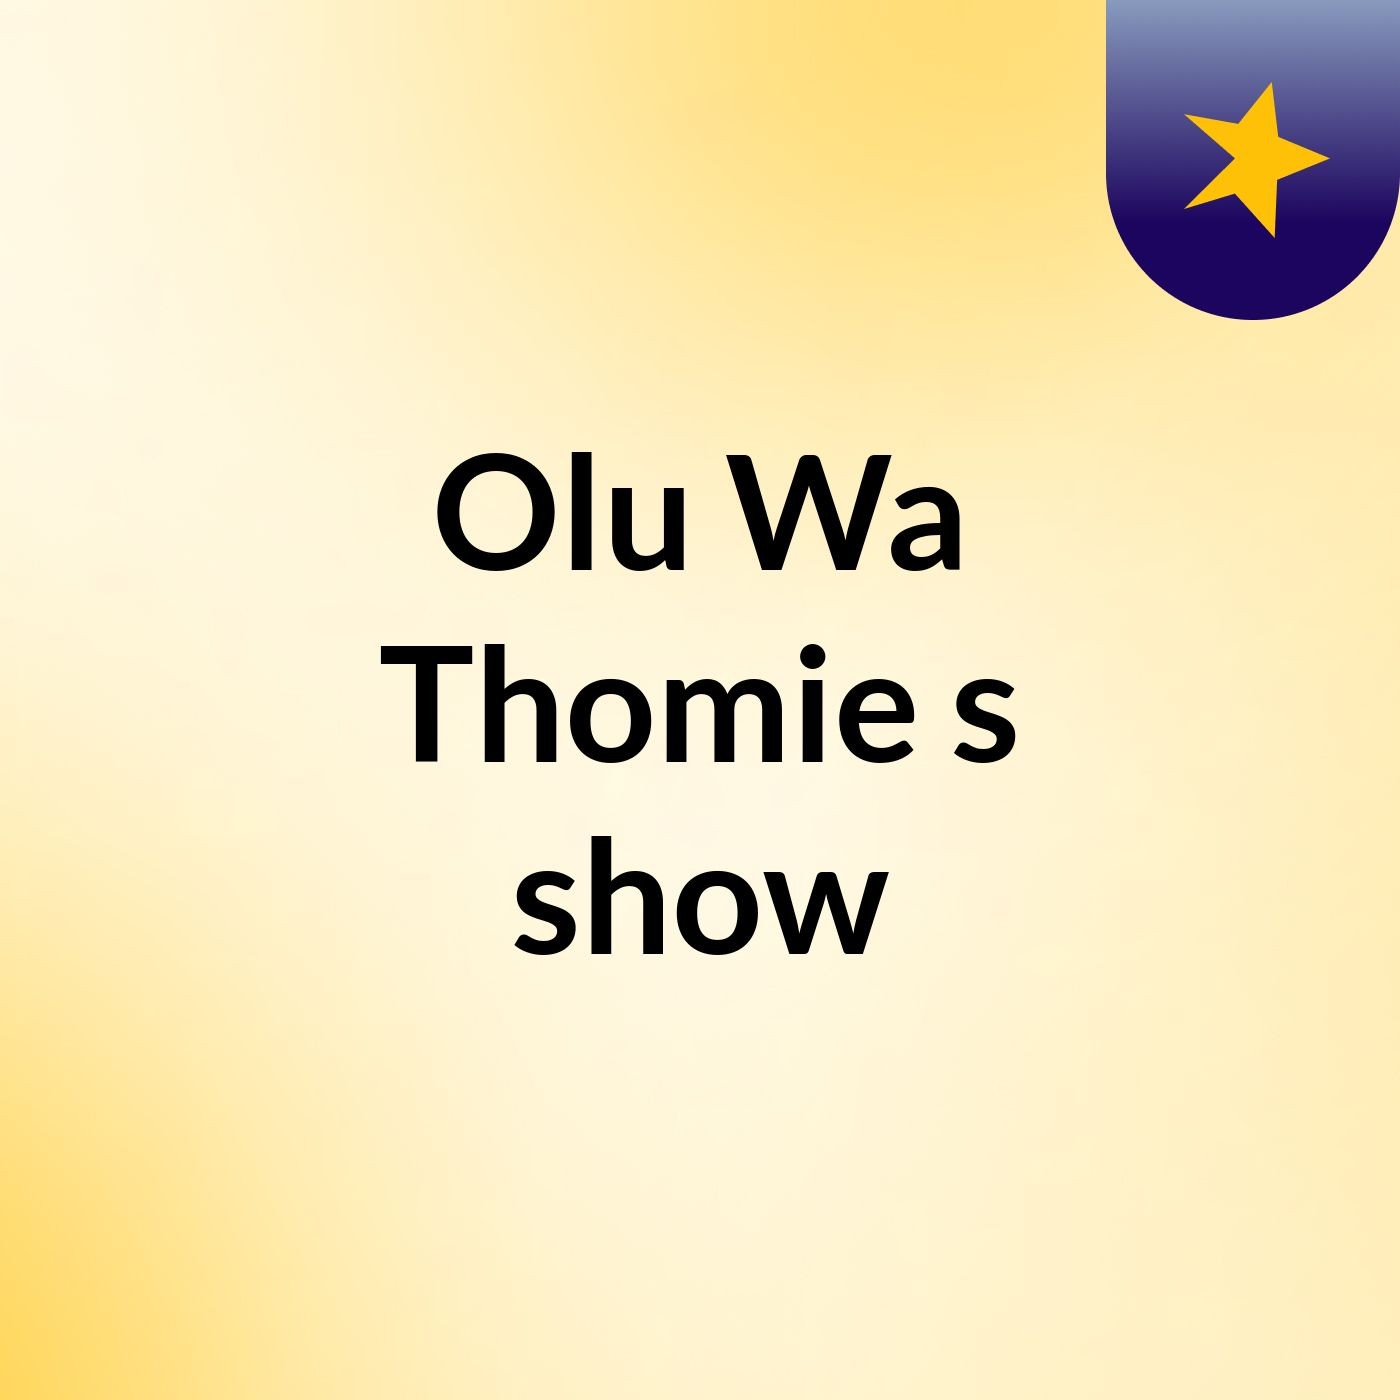 Olu Wa Thomie's show